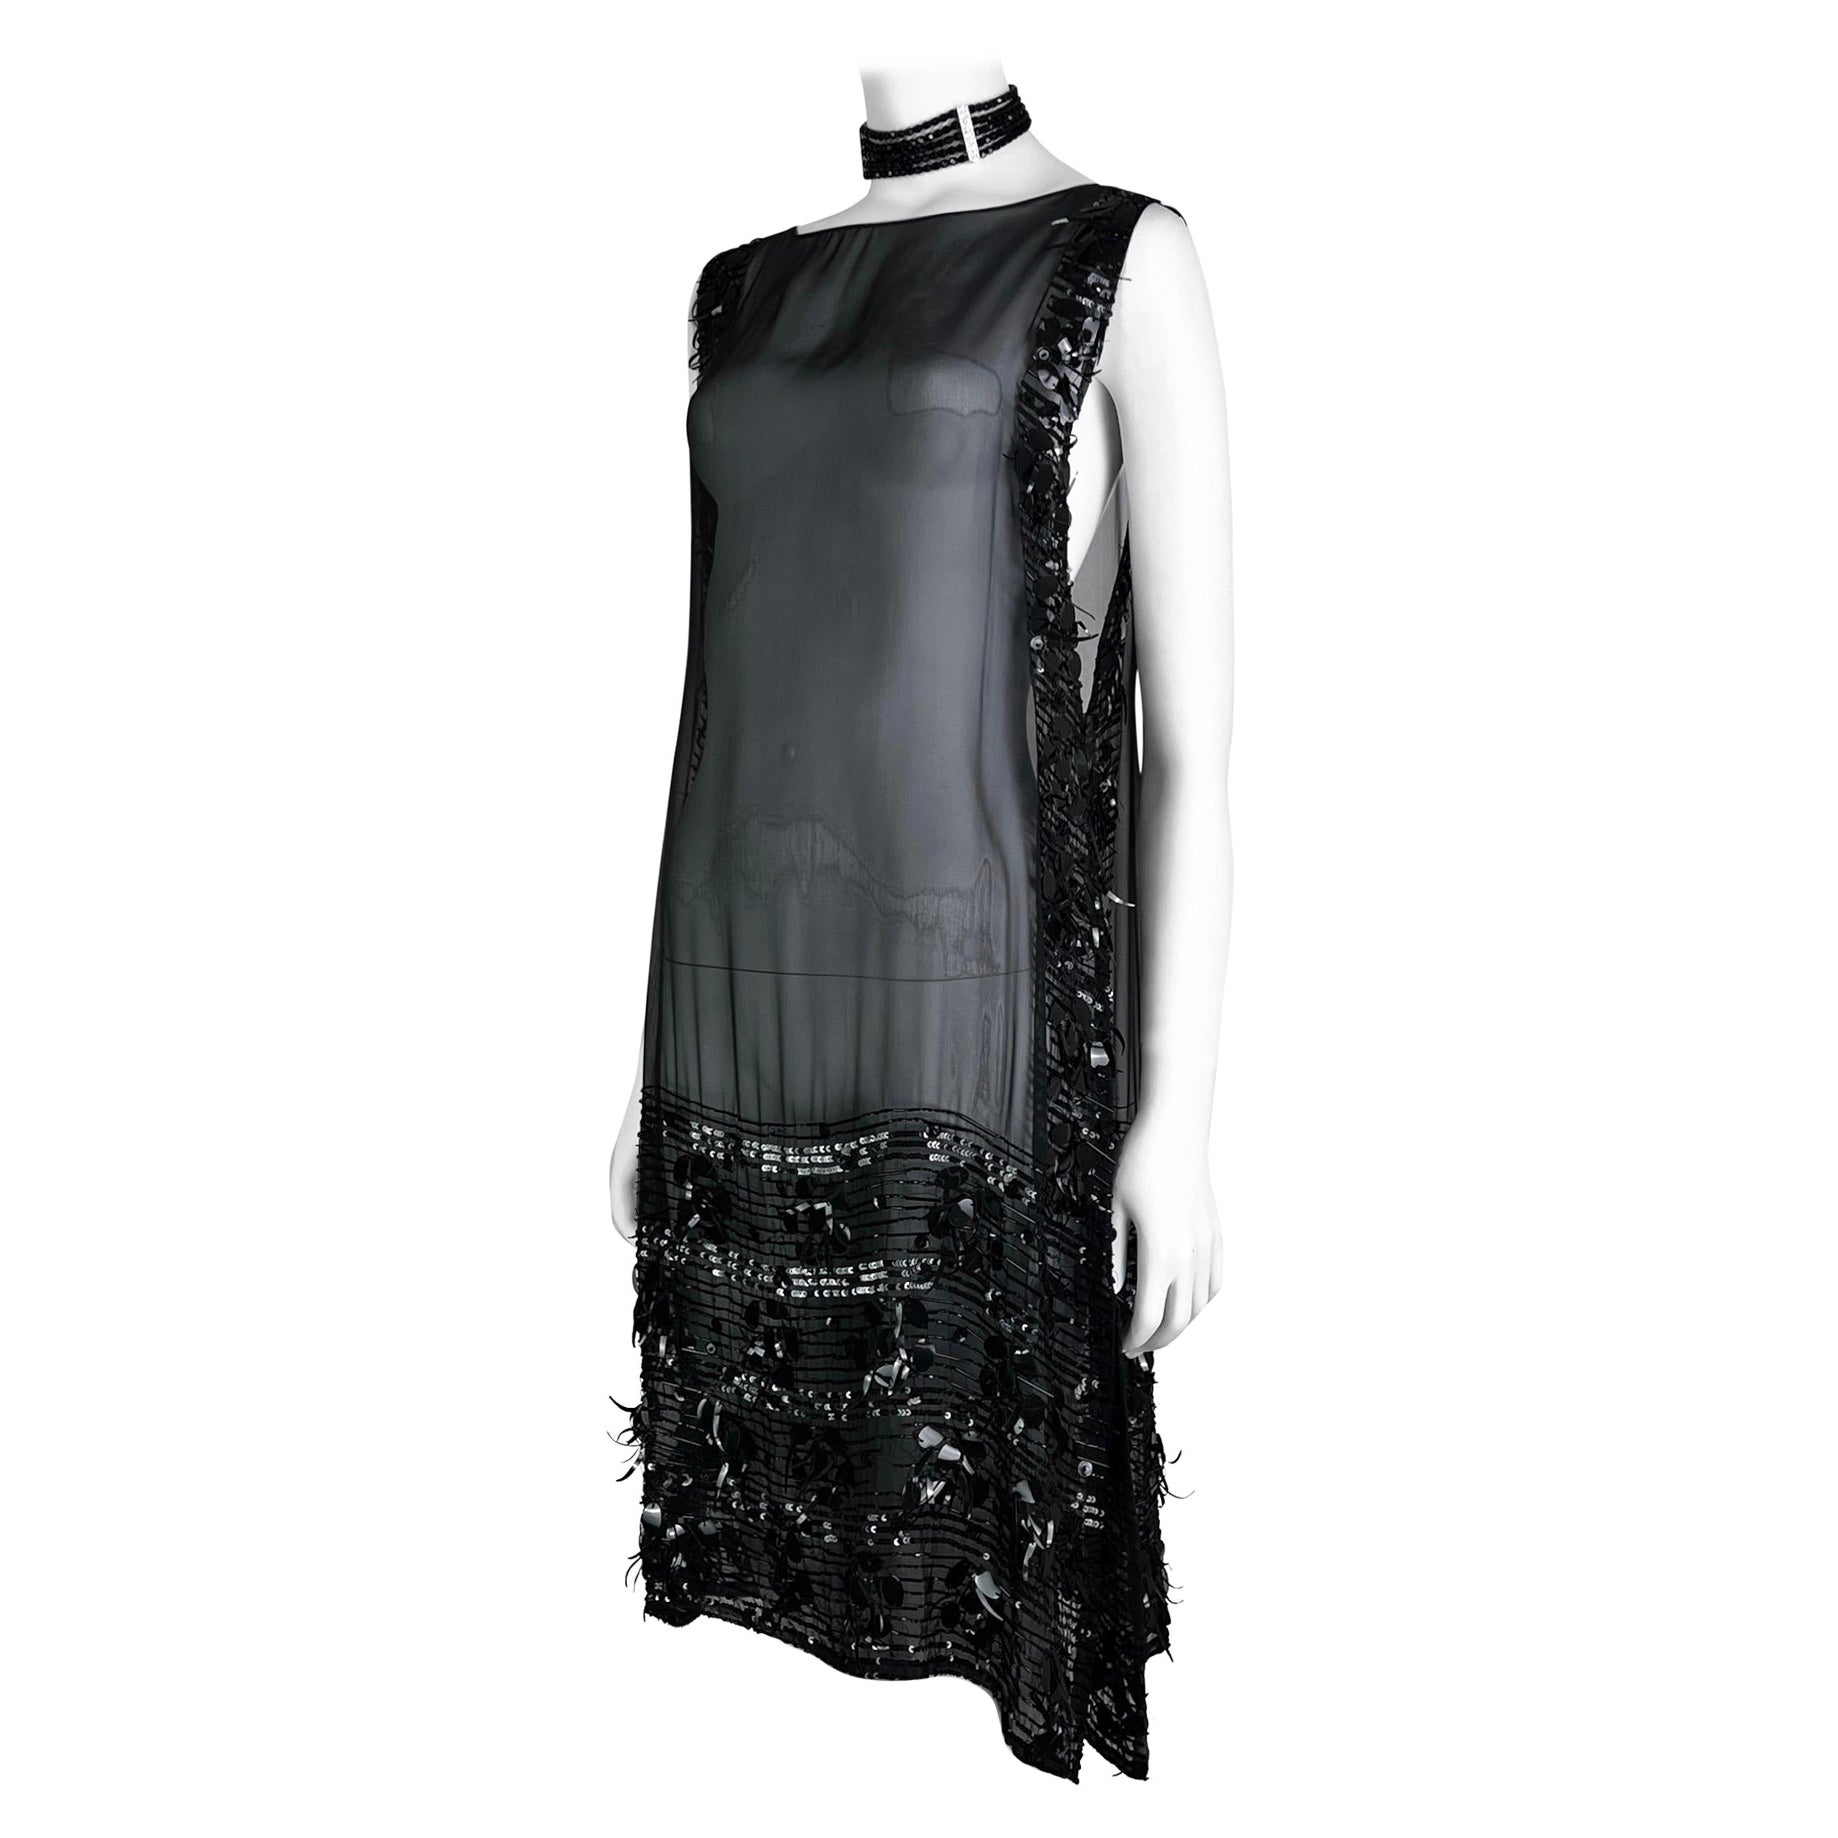 Jean-Paul Gaultier Fall 2004 Embellished Black Silk Chiffon Tunic Dress For Sale